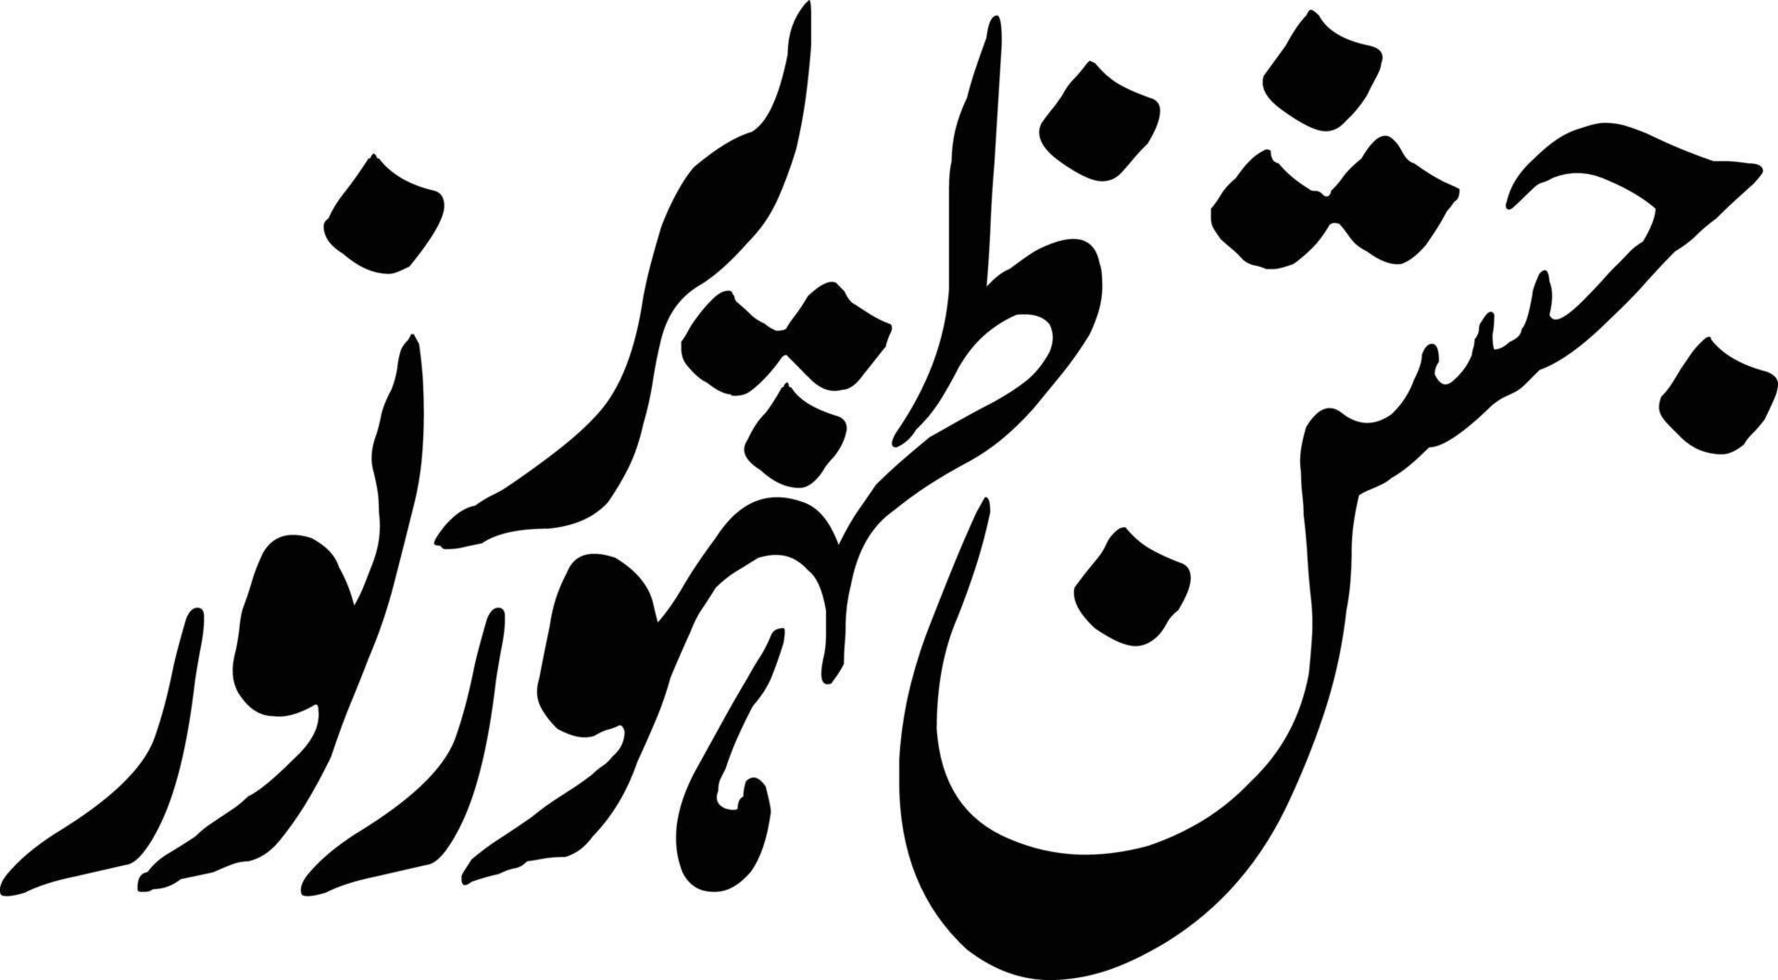 jashin zahoor pur noor título caligrafia árabe urdu islâmica vetor livre